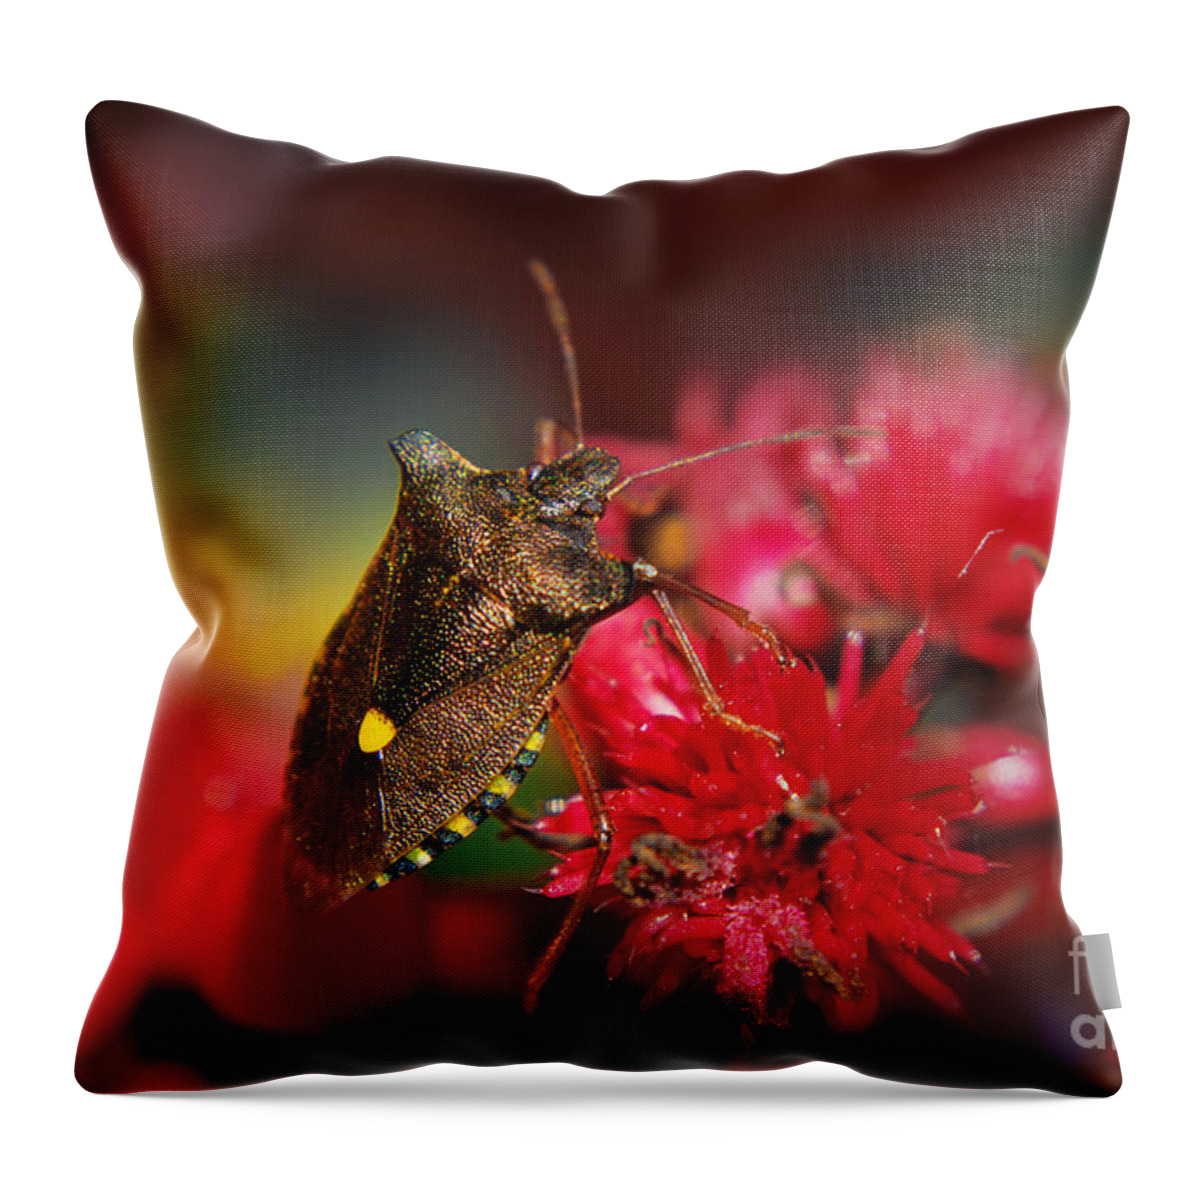 Yhun Suarez Throw Pillow featuring the photograph Forest Bug - Pentatoma Rufipes by Yhun Suarez